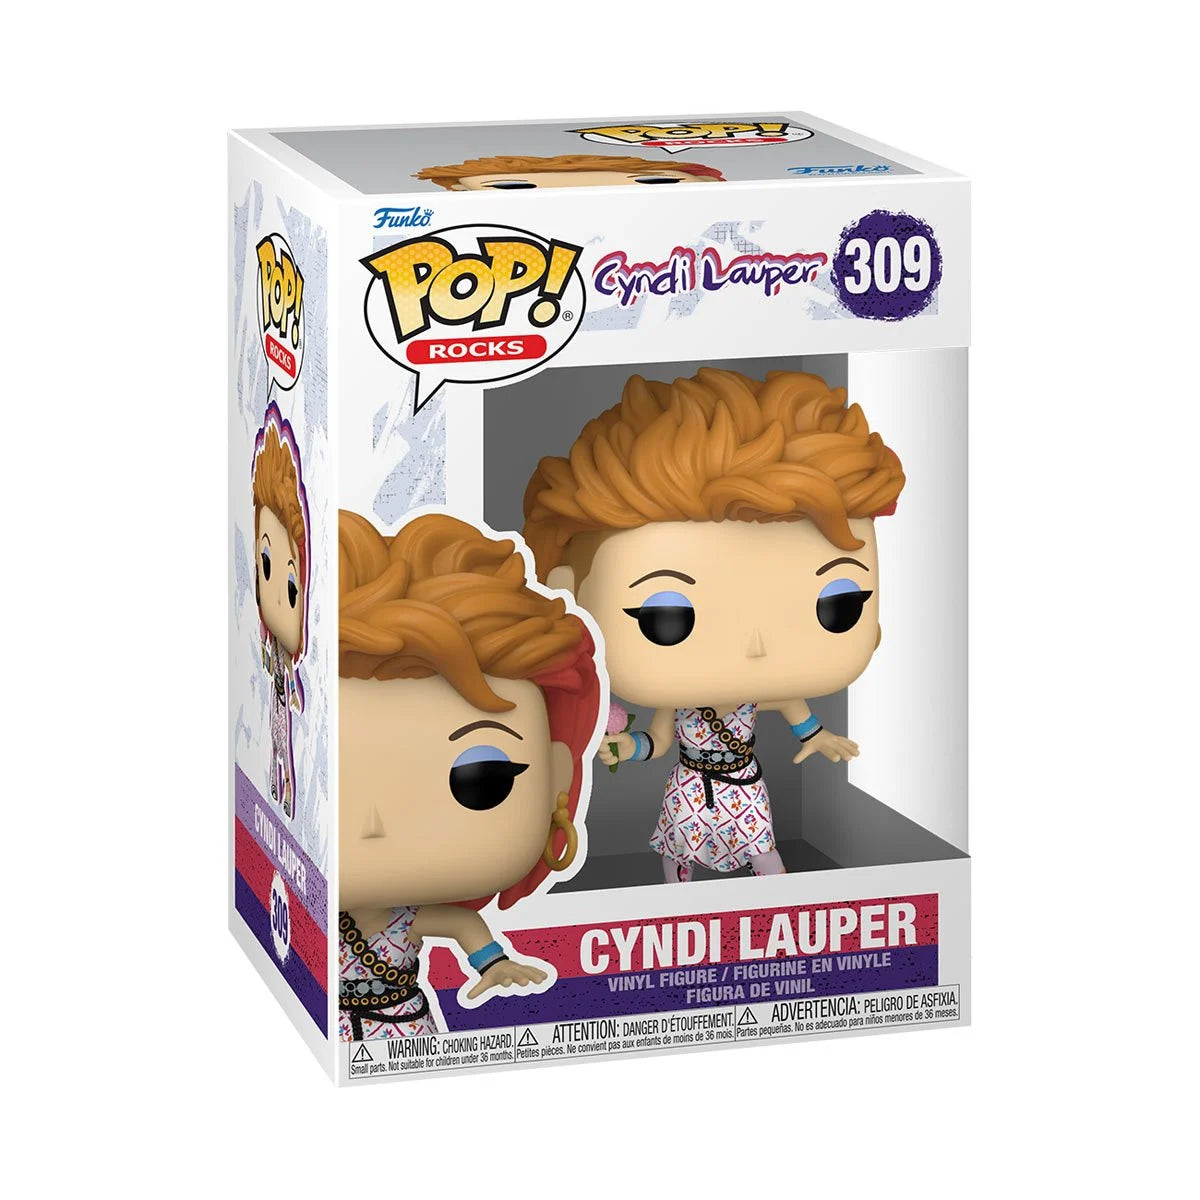 Cyndi Lauper Girls Just Wanna Have Fun Pop! Vinyl Figure